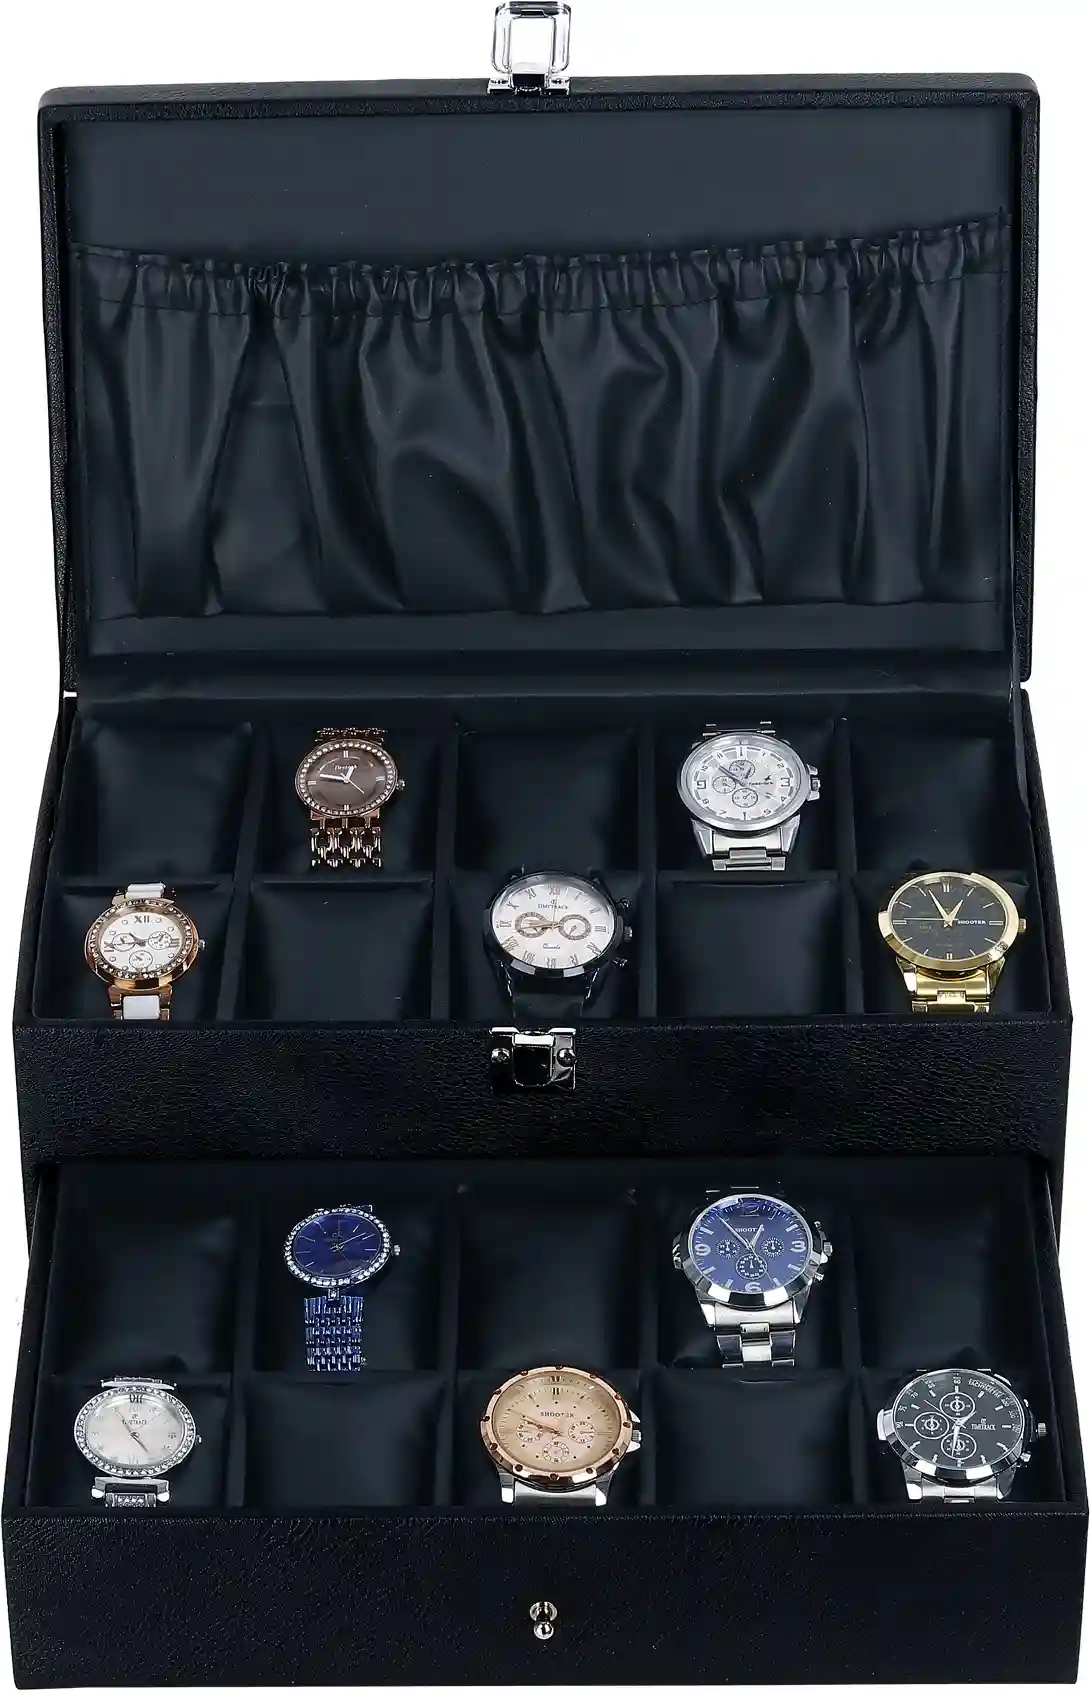 Buy LEDO Watch Box Organizer Storage Case for Men and Women in